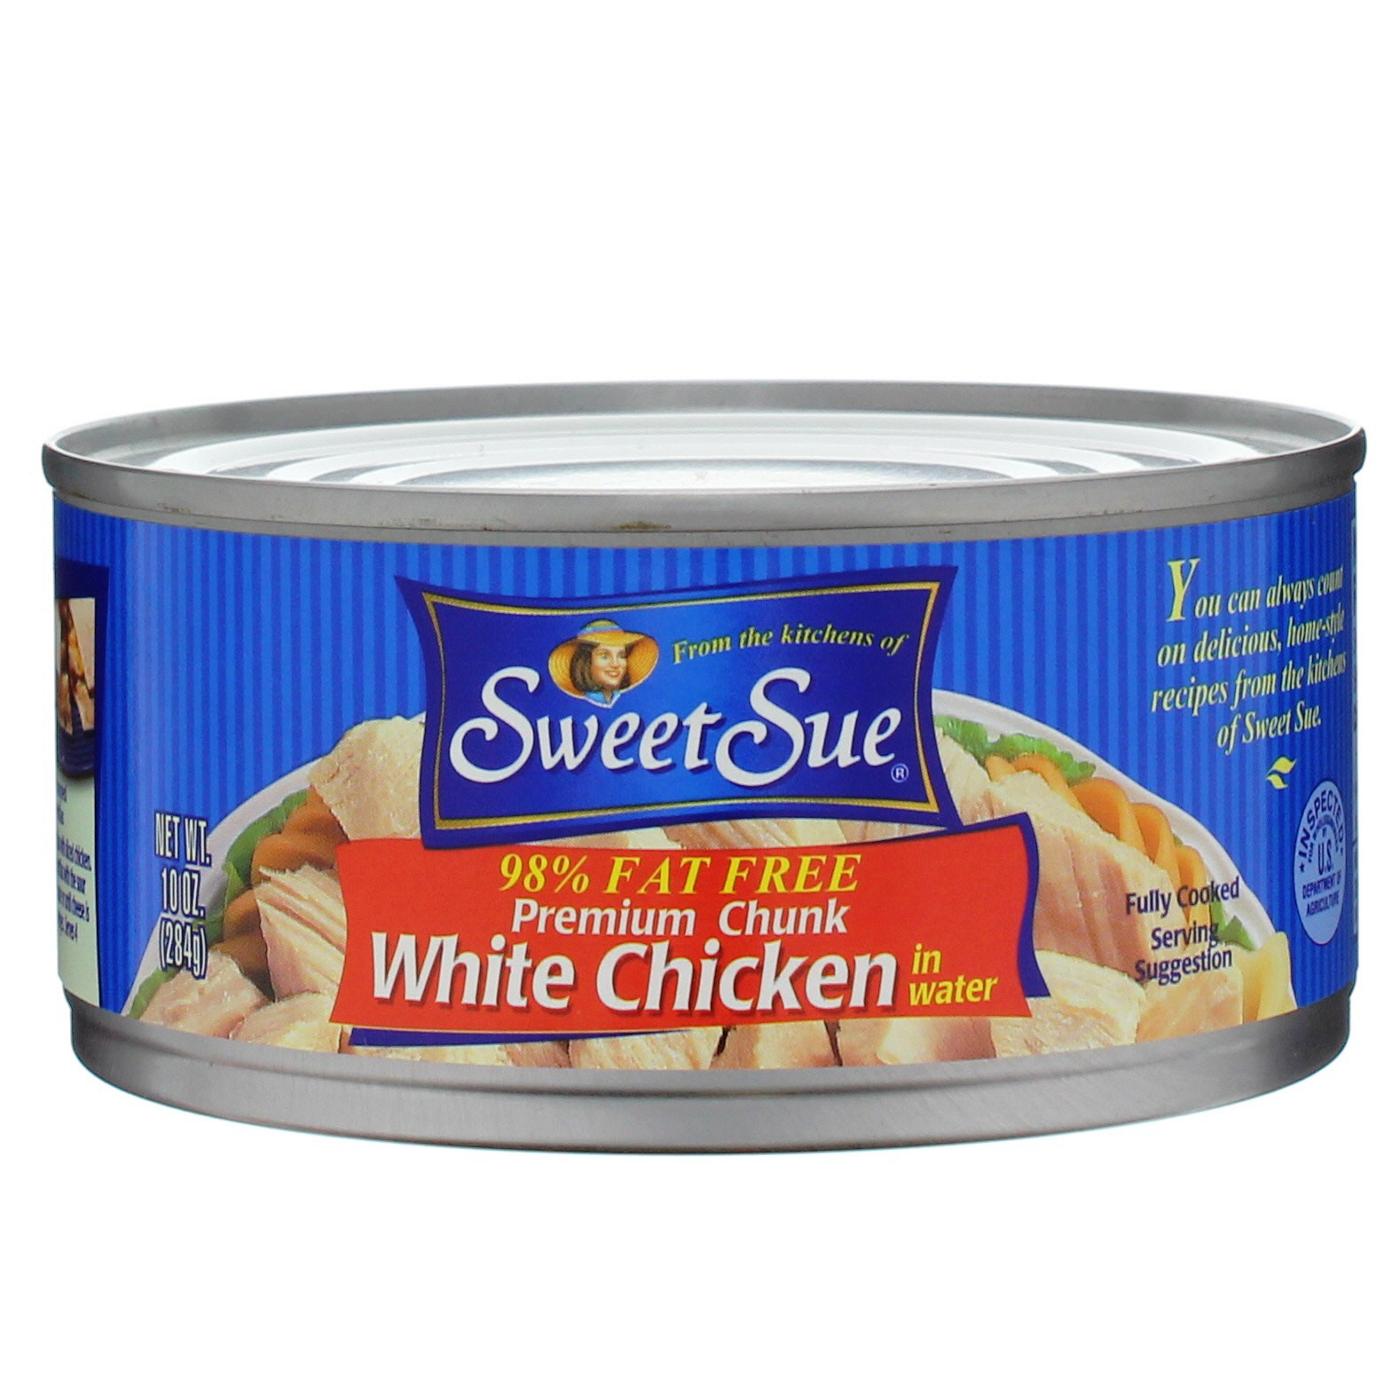 Sweet Sue 98% Fat Free Premium Chunk White Chicken; image 1 of 2